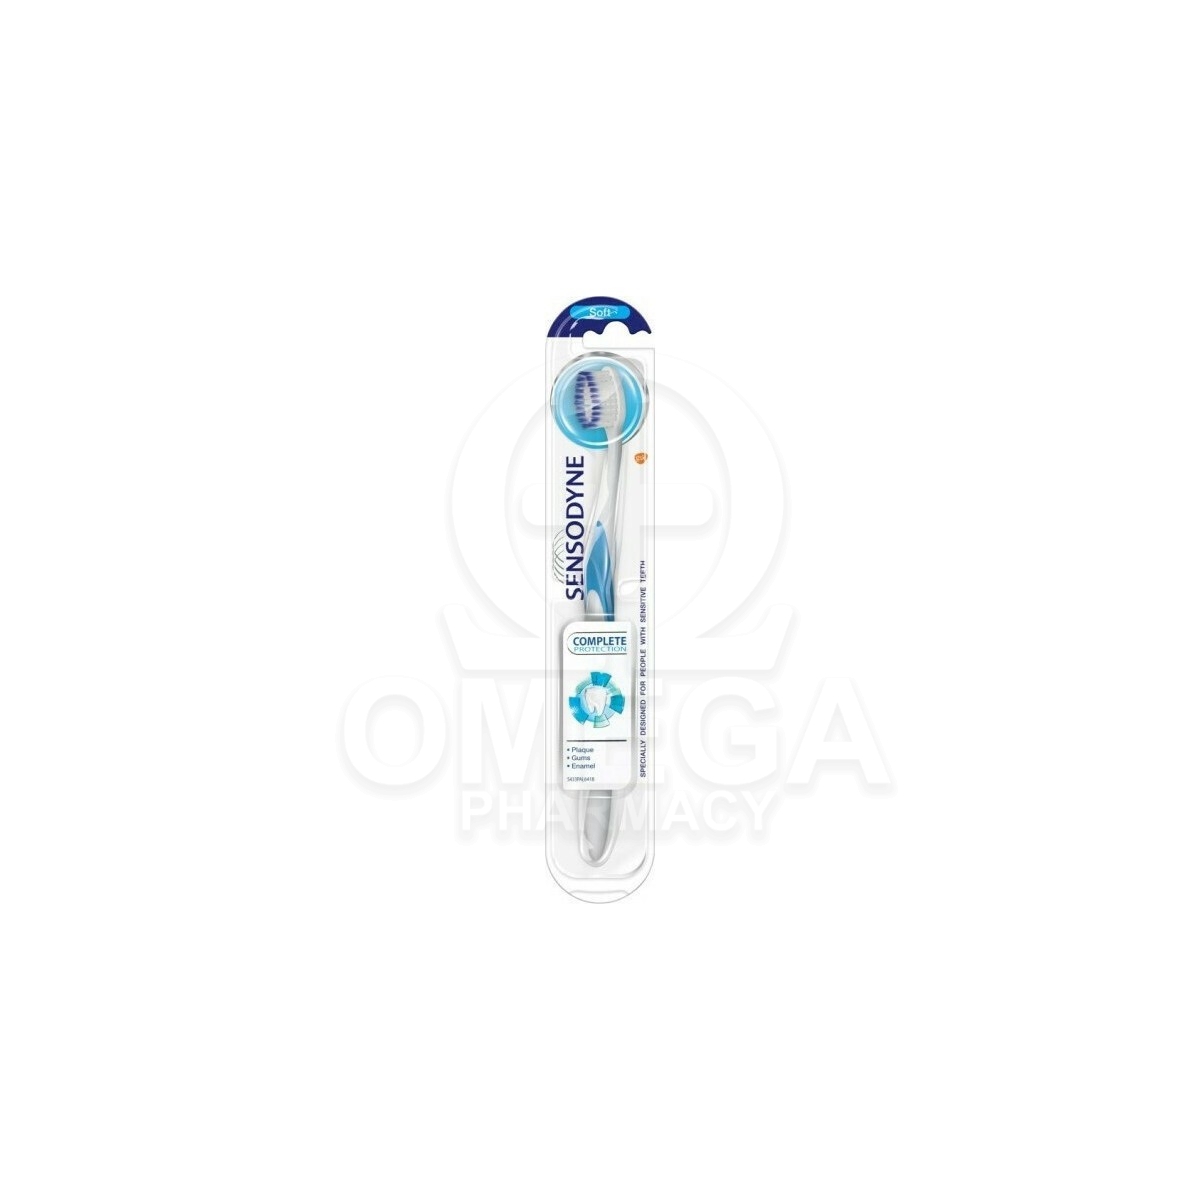 SENSODYNE Complete Protection Soft Μαλακή Οδοντόβουρτσα σε Σιέλ-Λευκό Χρώμα  1τμχ